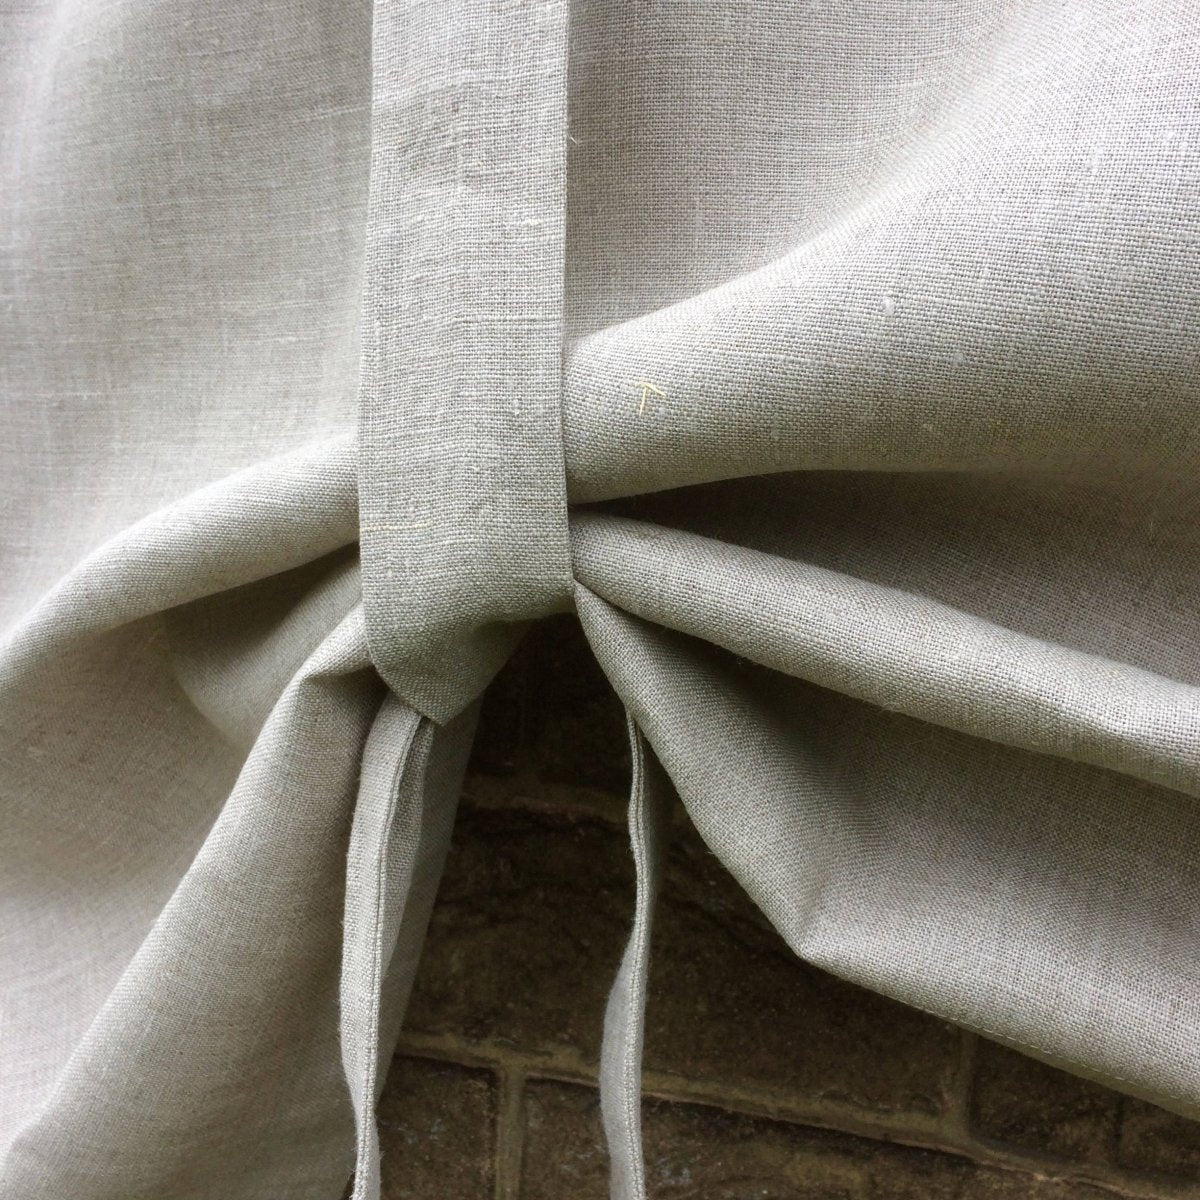 Poulton Natural Linen Lace Tie Up Curtain - Linen and Letters